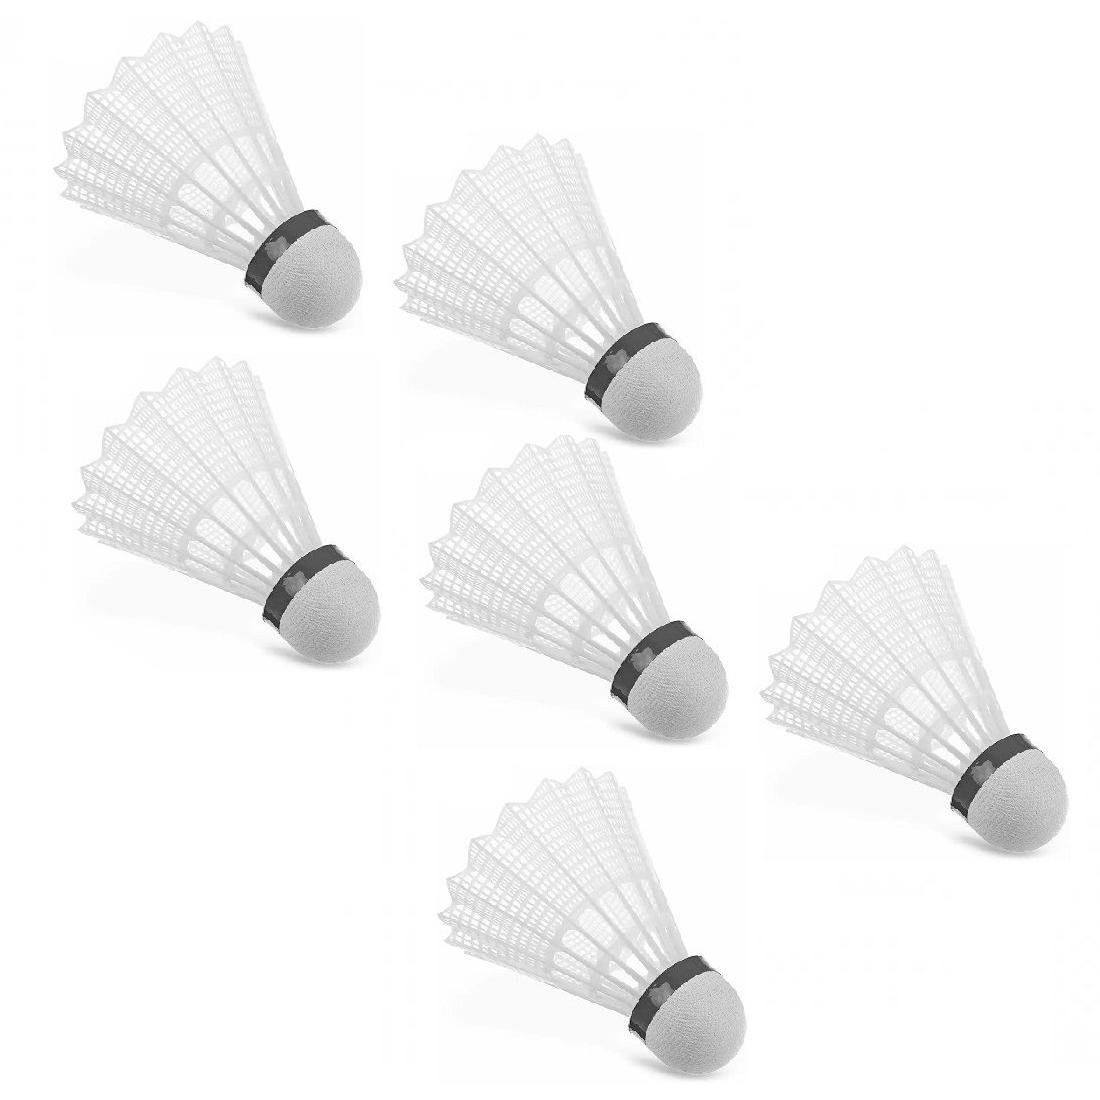 Peteca Badminton de Nylon e Espuma A100 Pack 6 Unidades Aoliante - Branco - 2